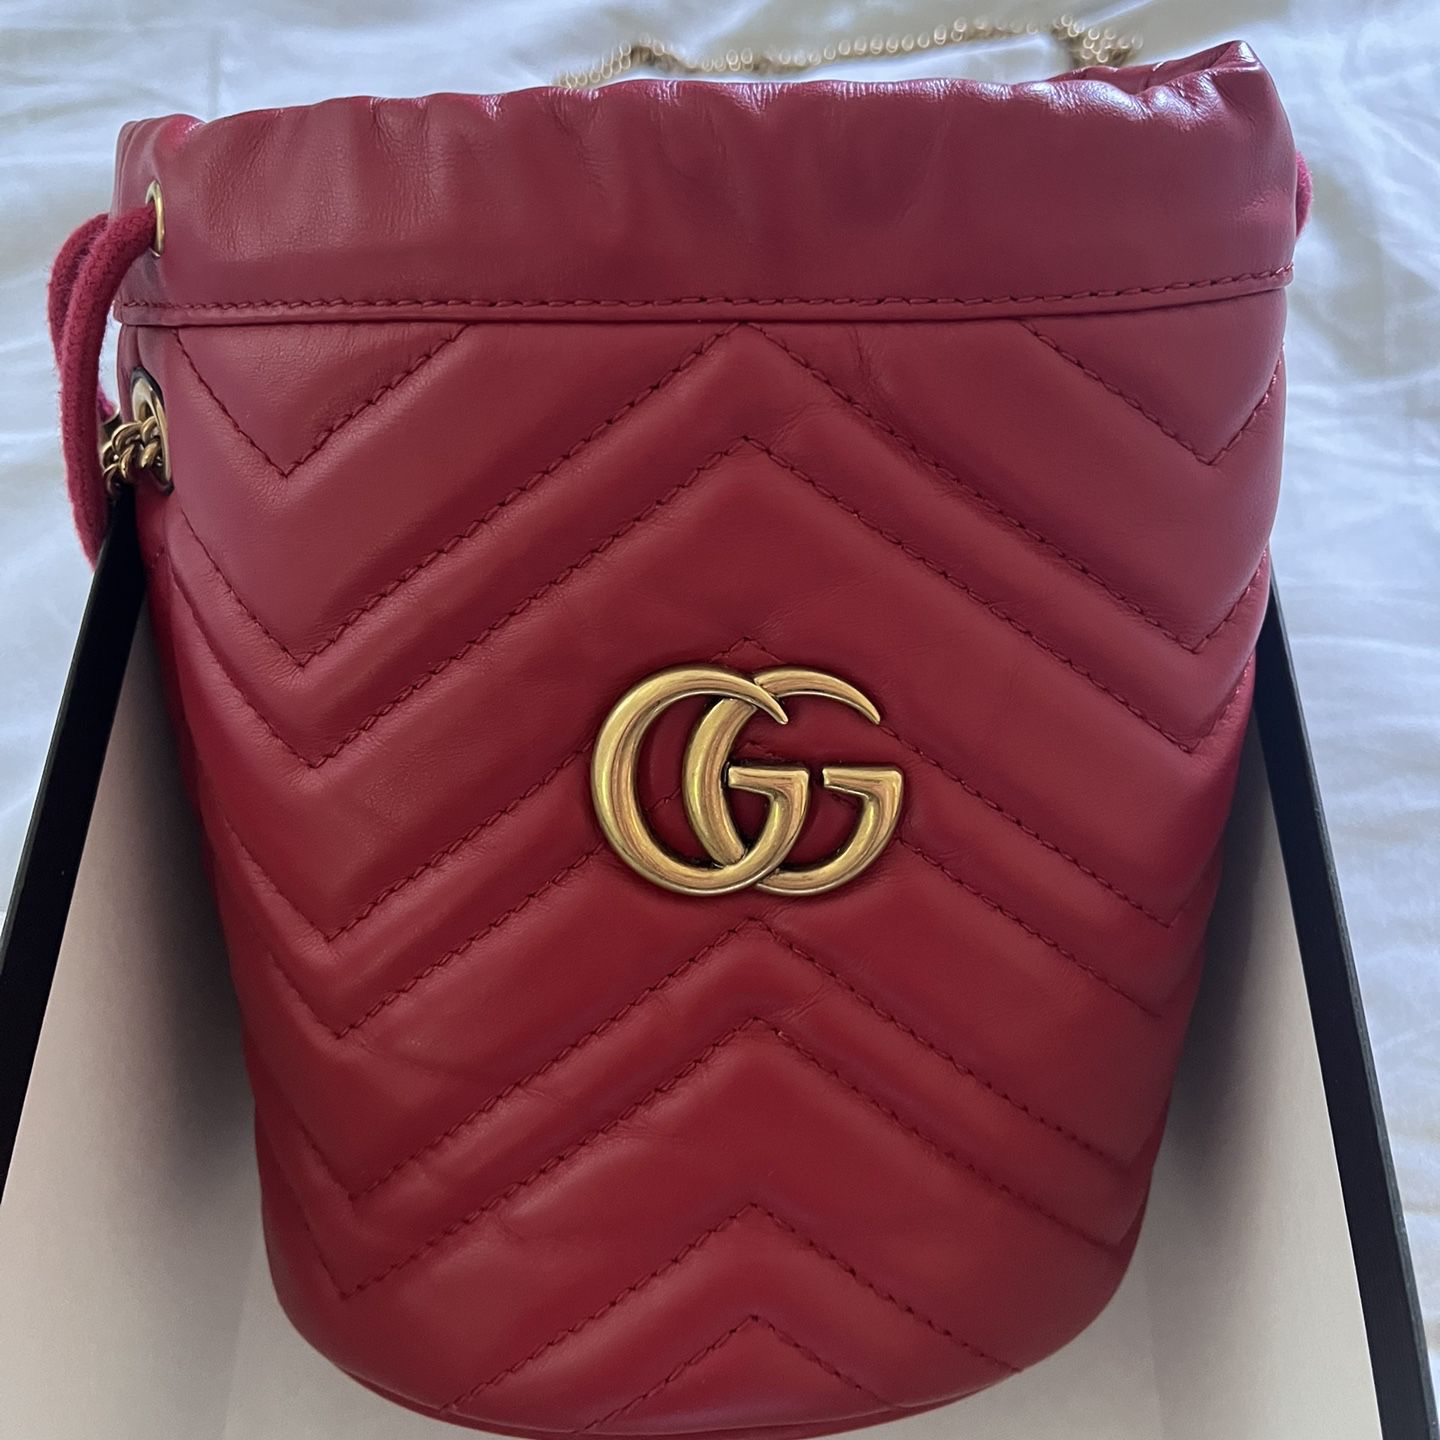 Excellent Condition Gucci Bag